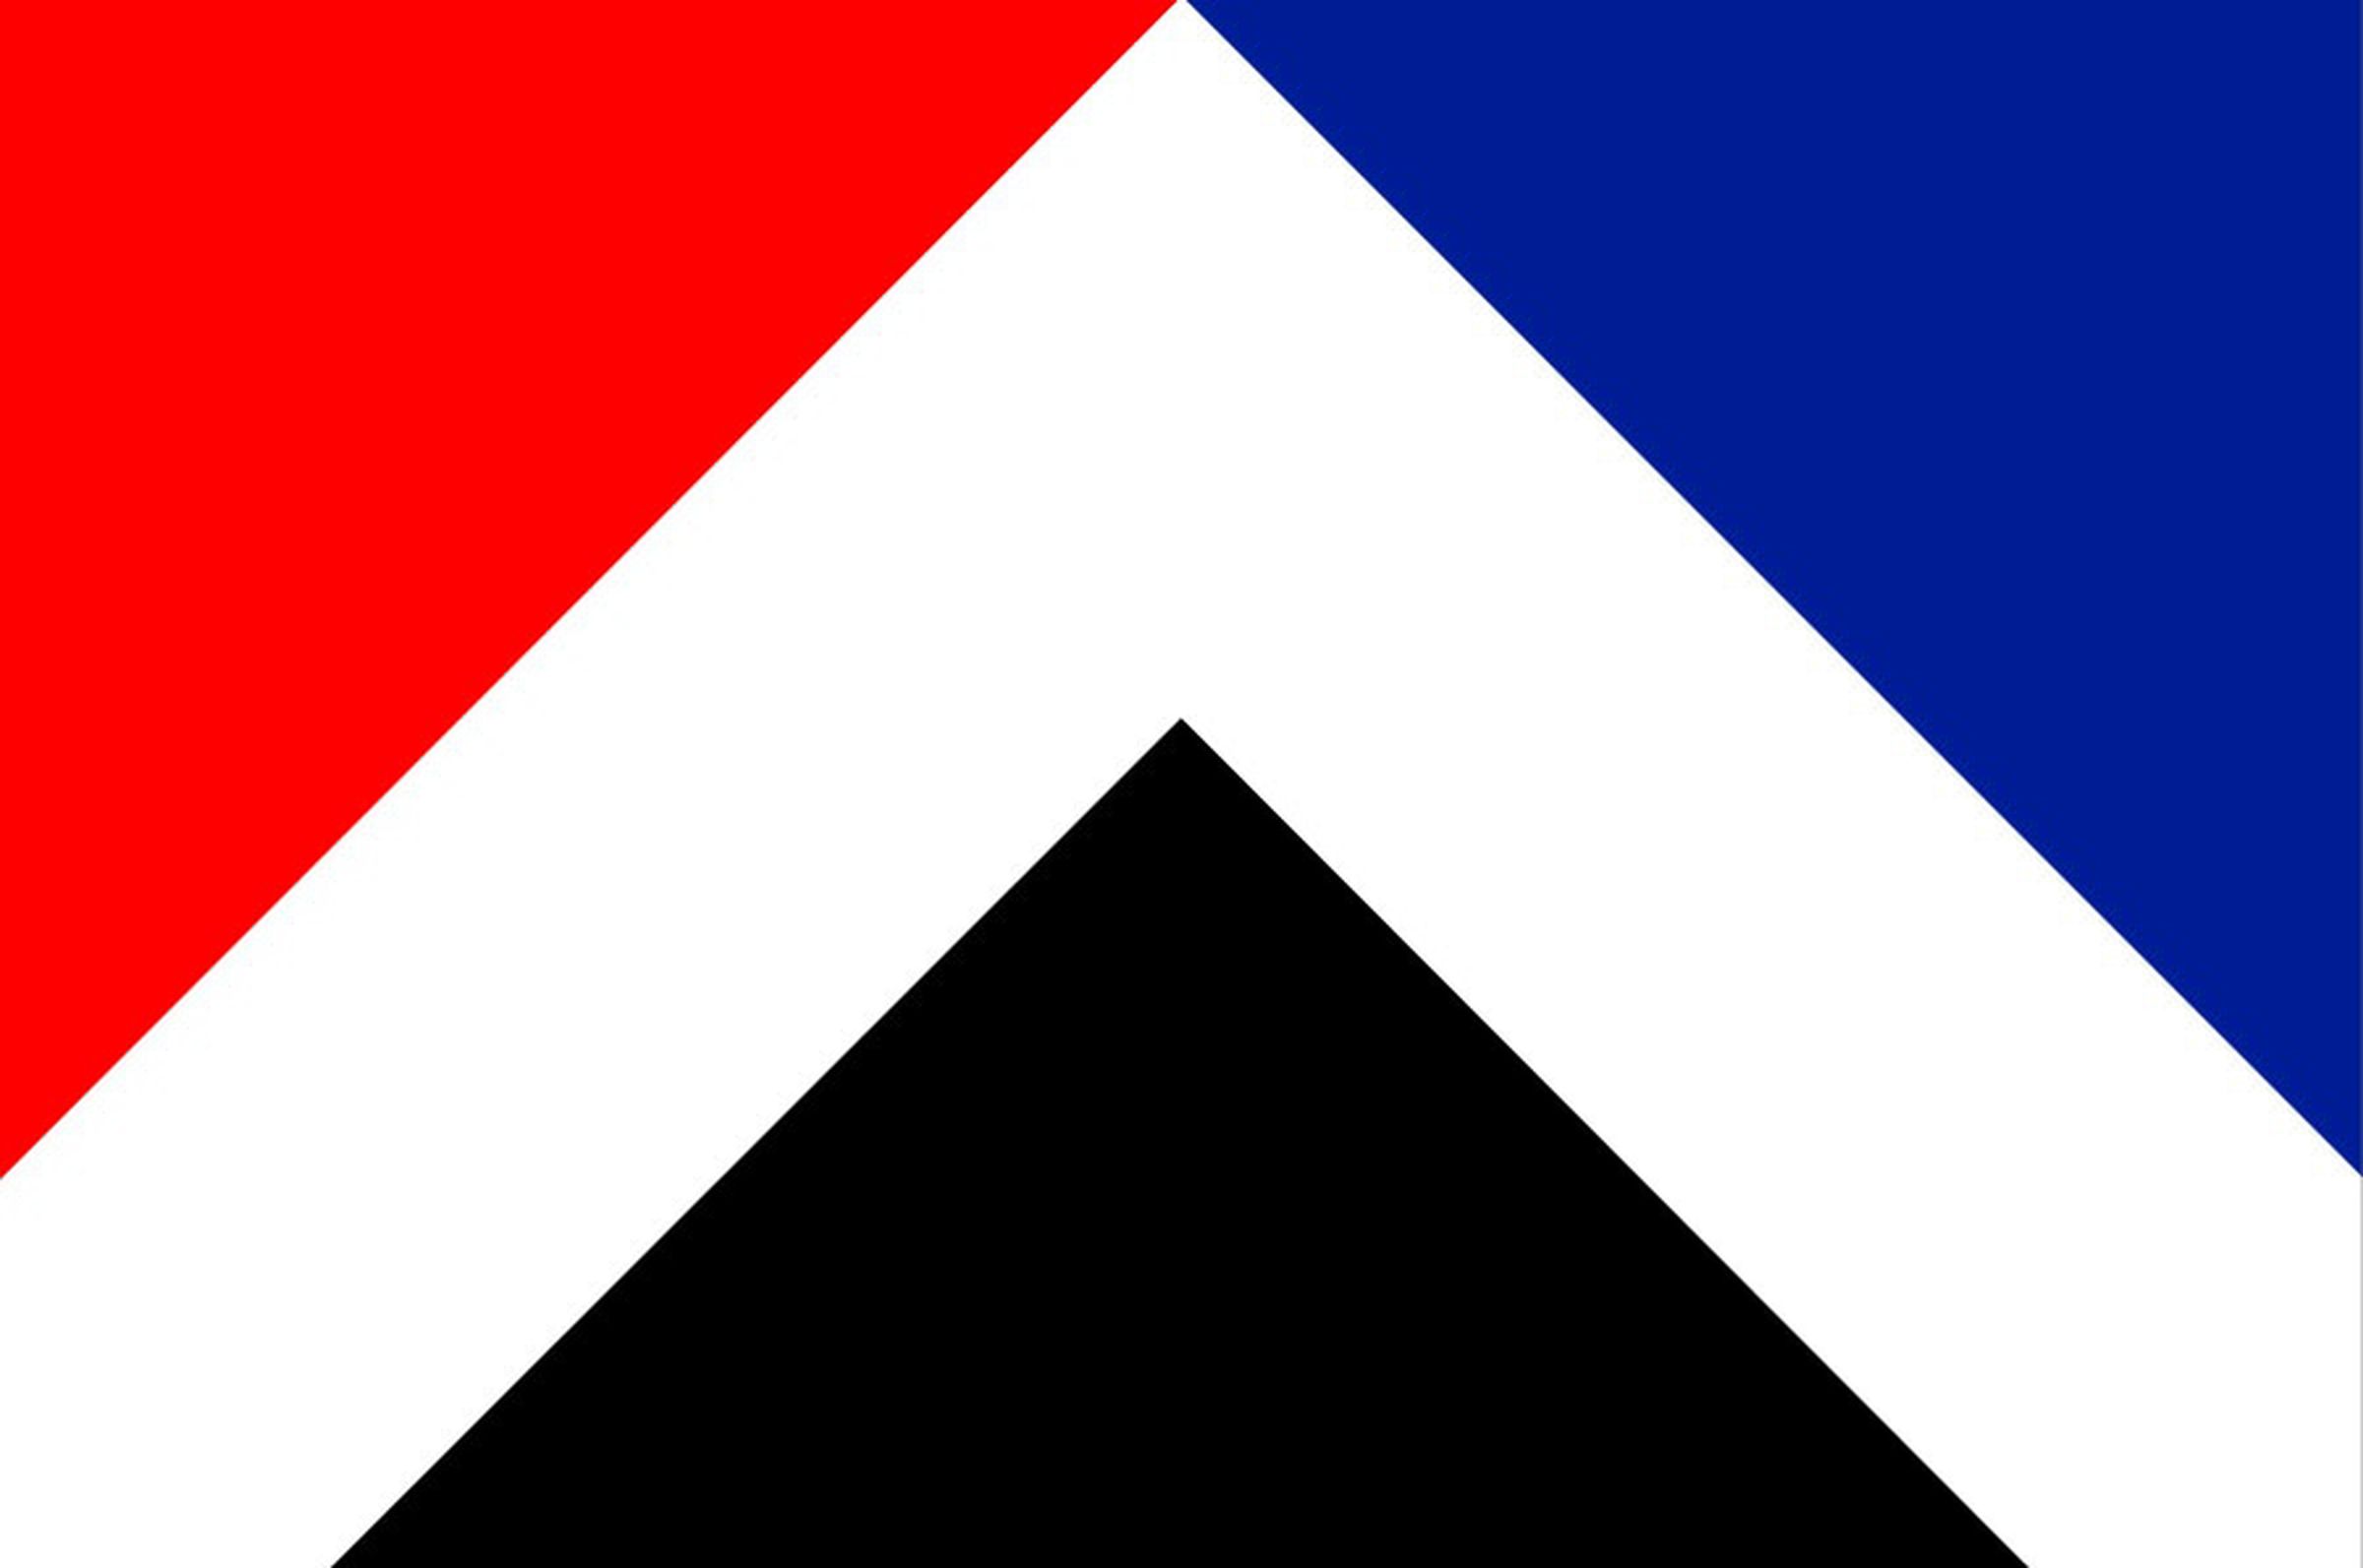 New Zealand's next flag